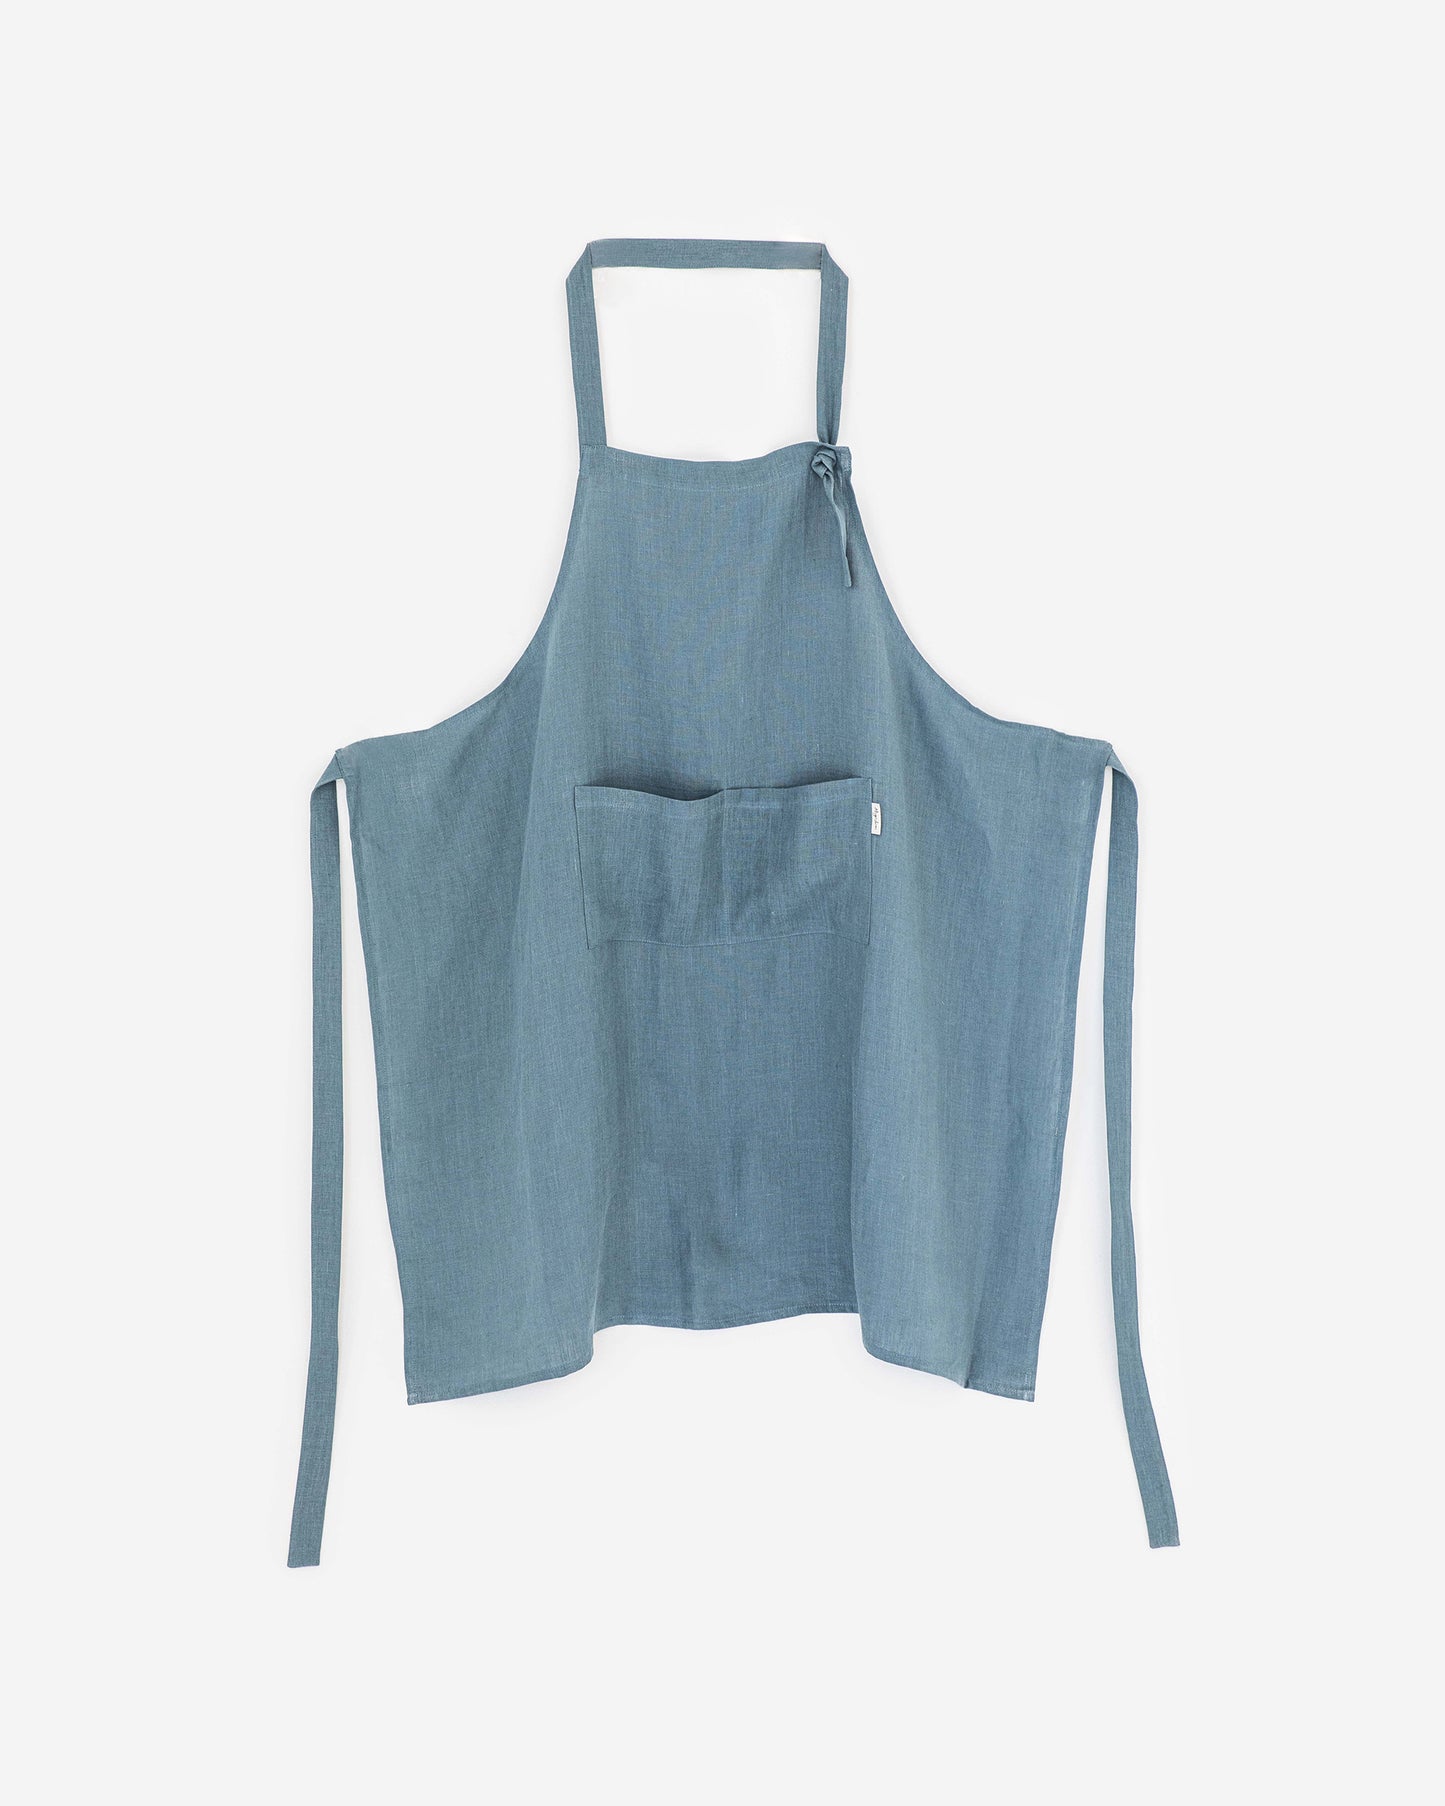 Men's linen bib apron in Gray blue | MagicLinen